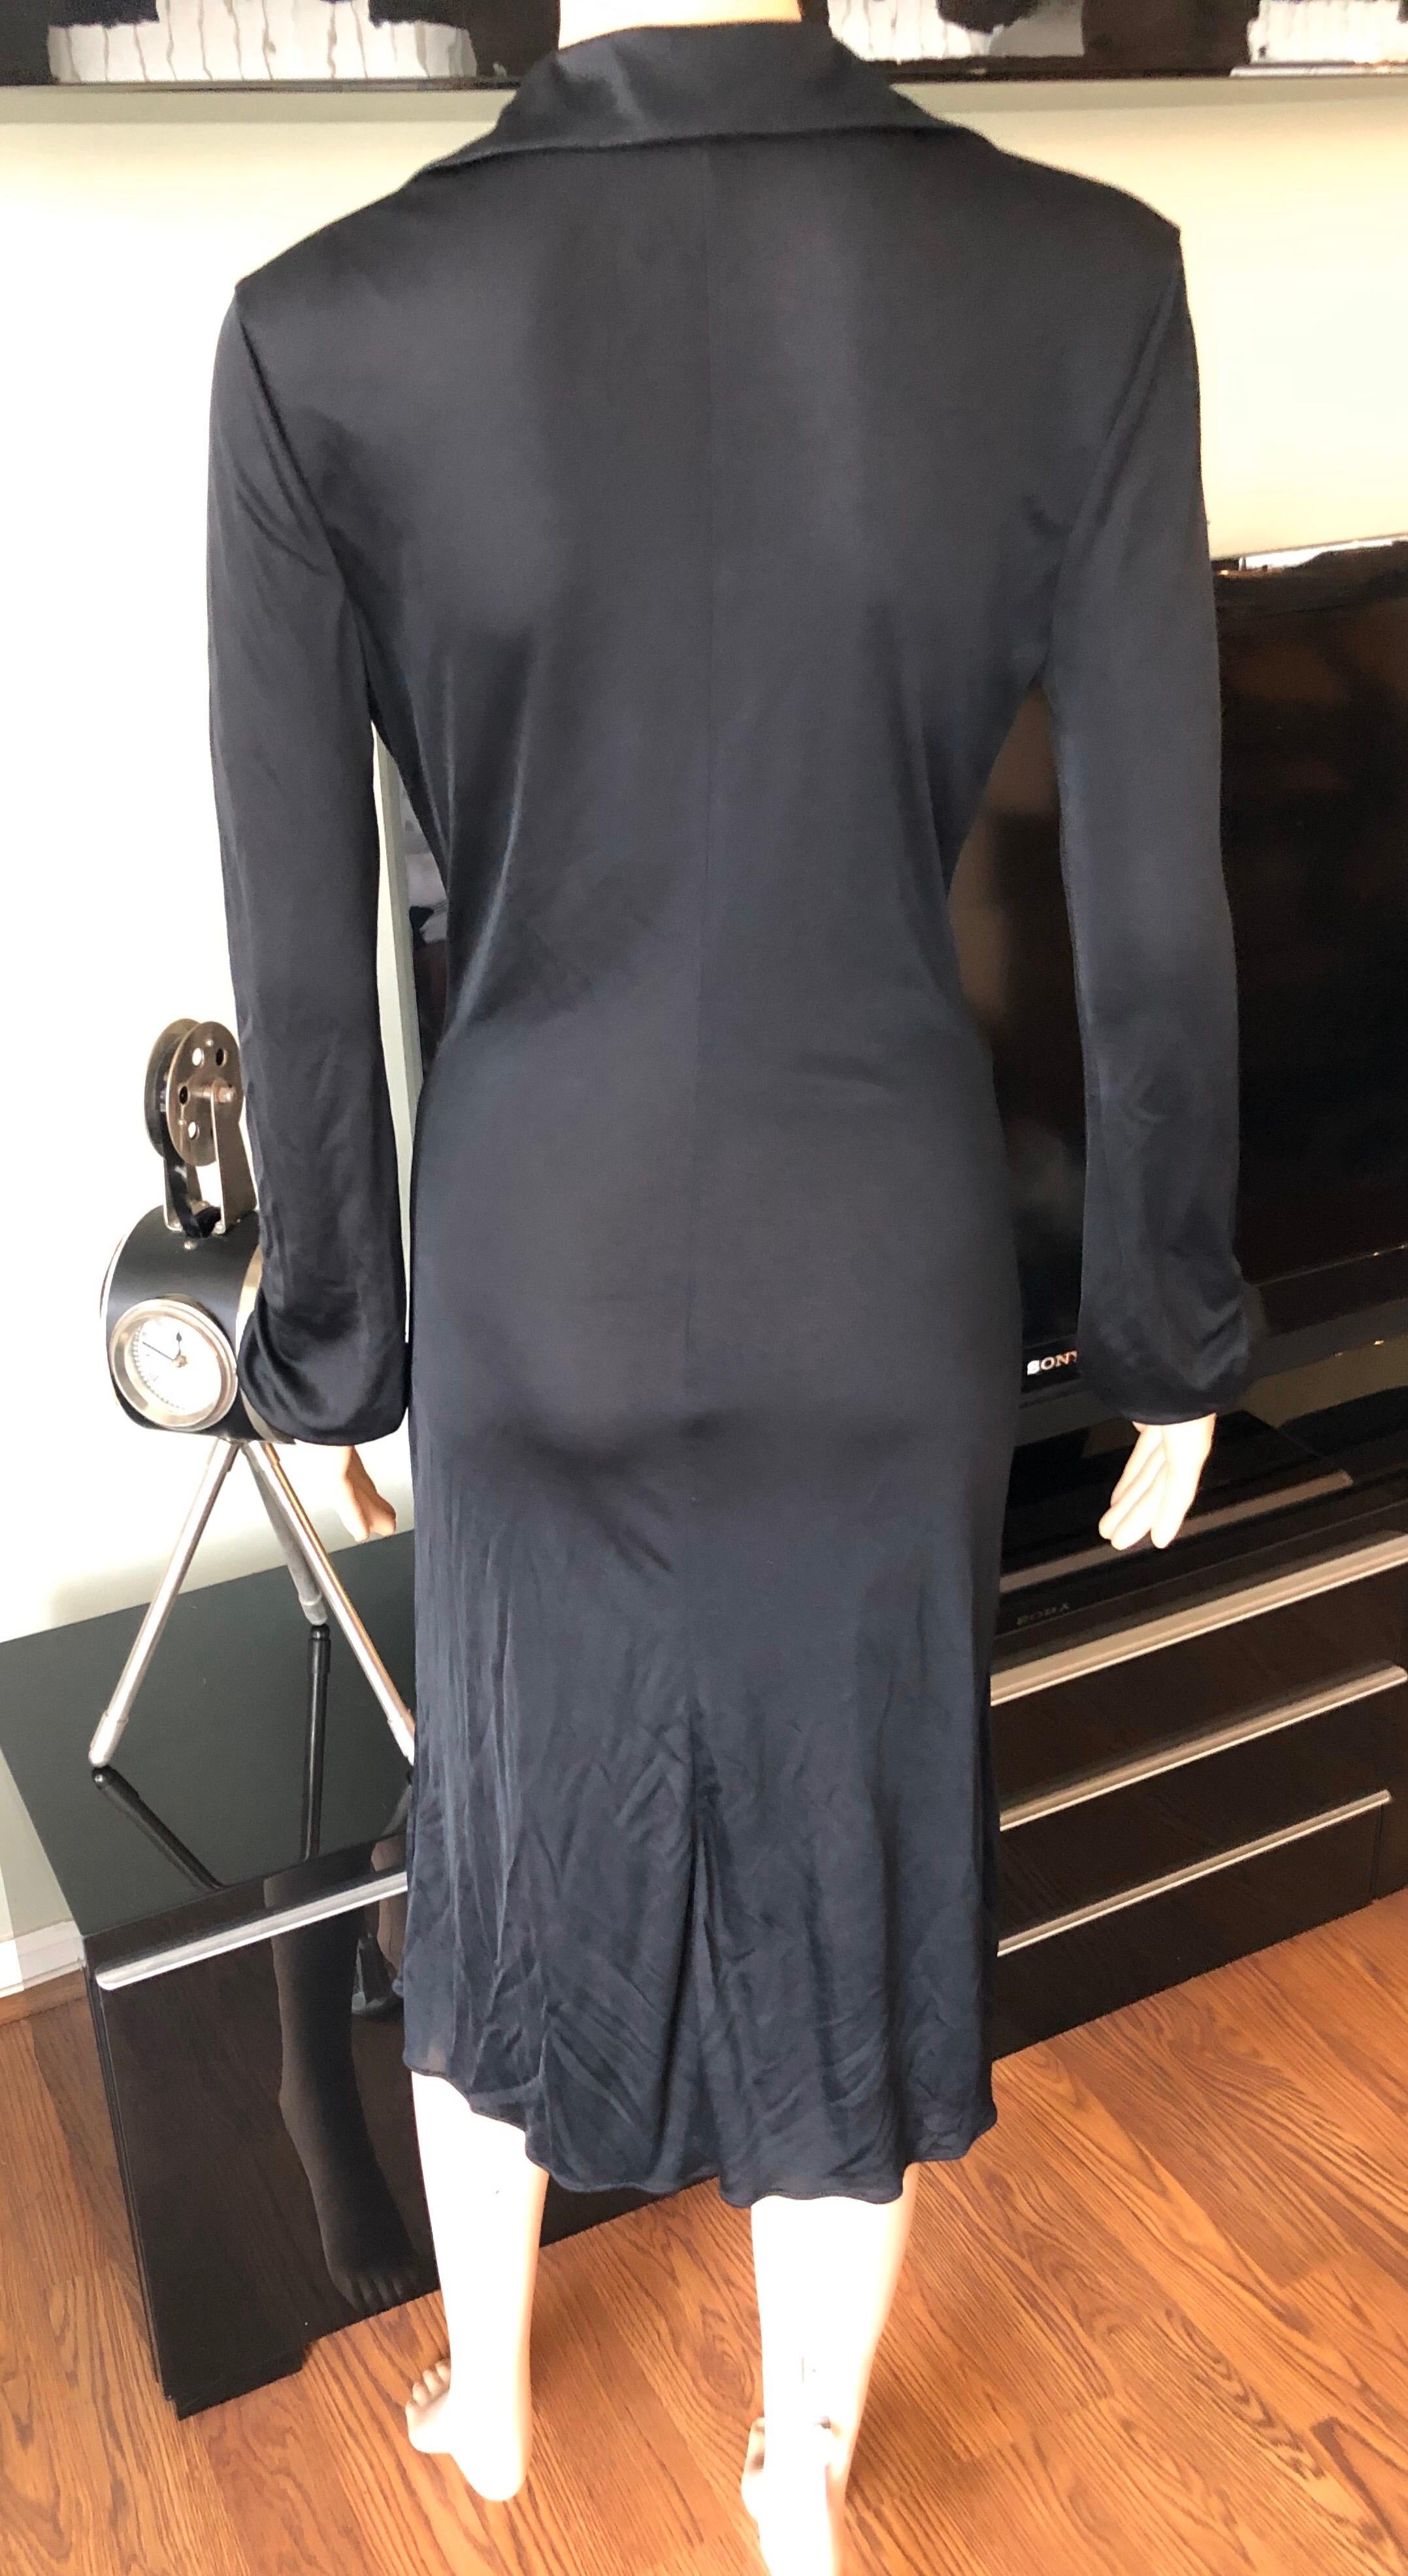 Gianni Versace S/S 2000 Runway Vintage Plunging Neckline Black Dress  For Sale 2